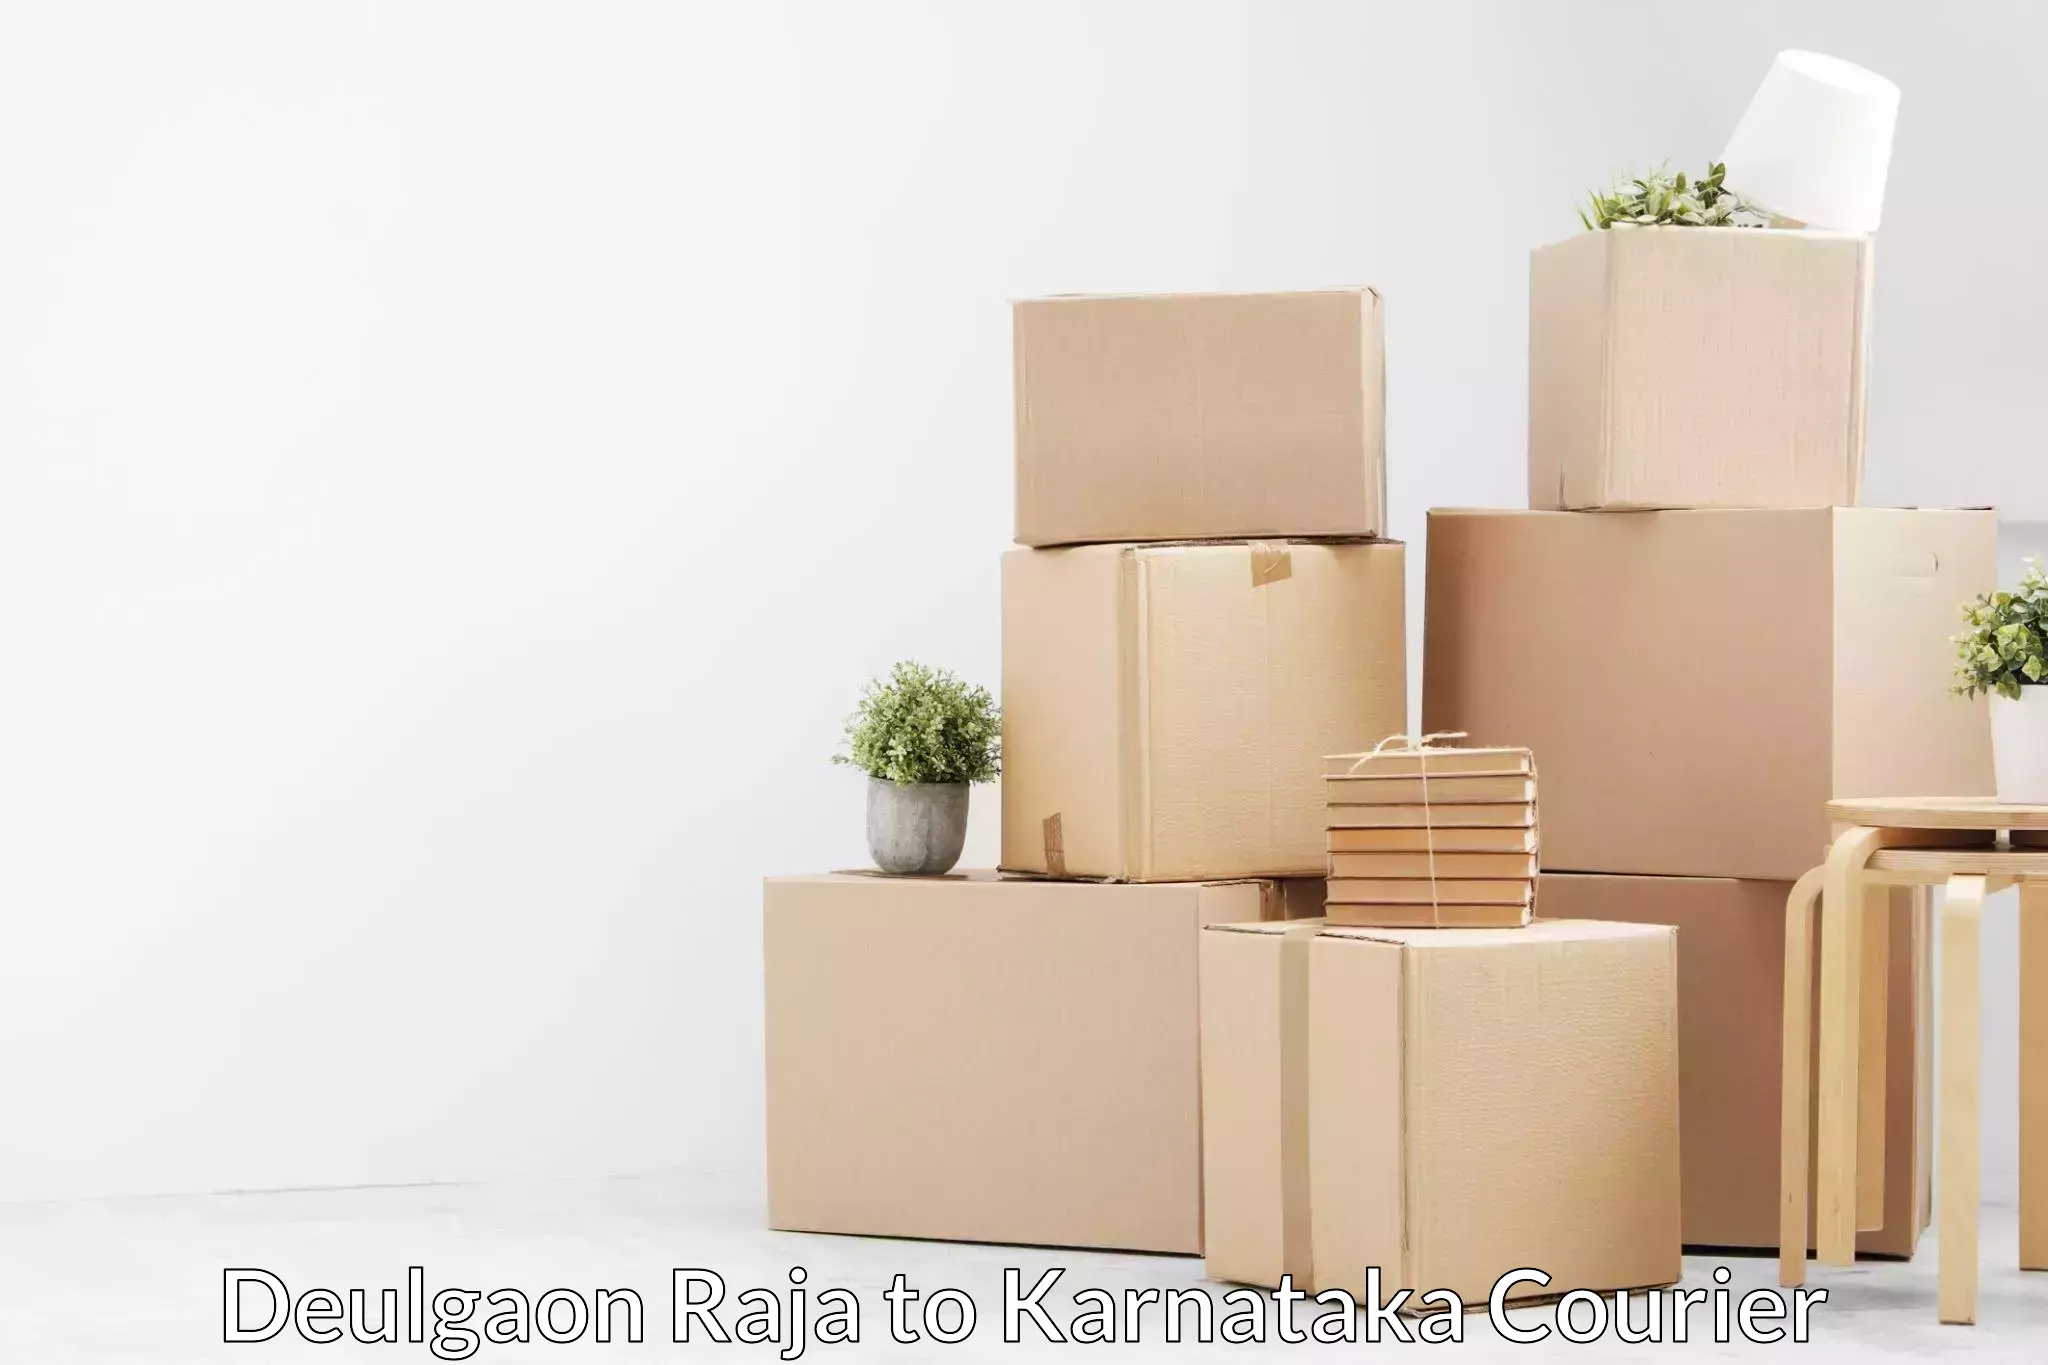 Professional moving company Deulgaon Raja to Deodurga